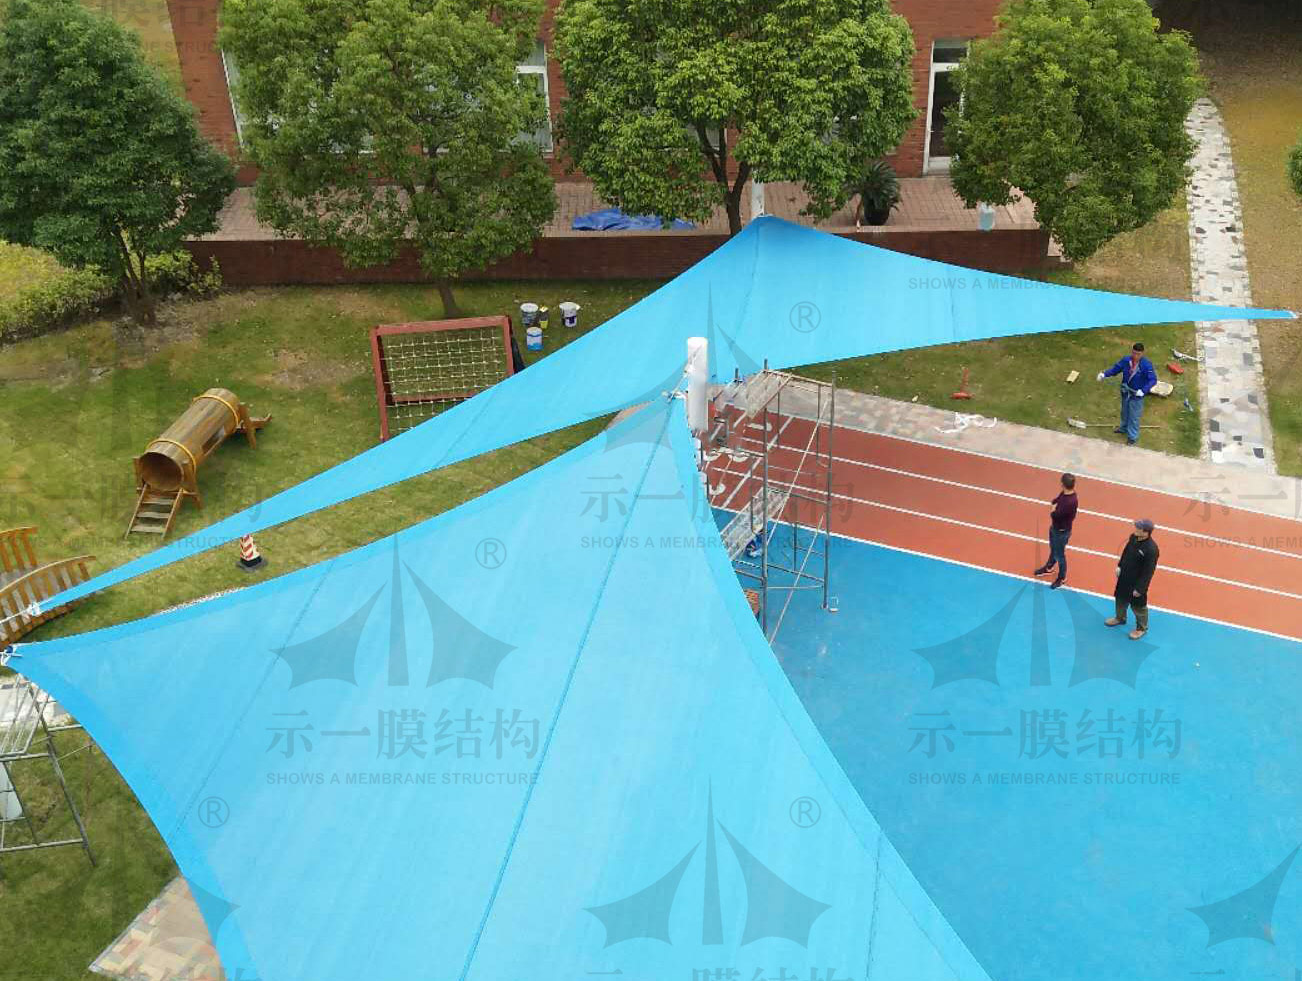 Shanghai SHOWS A membrane structure landscape shade sail sketch